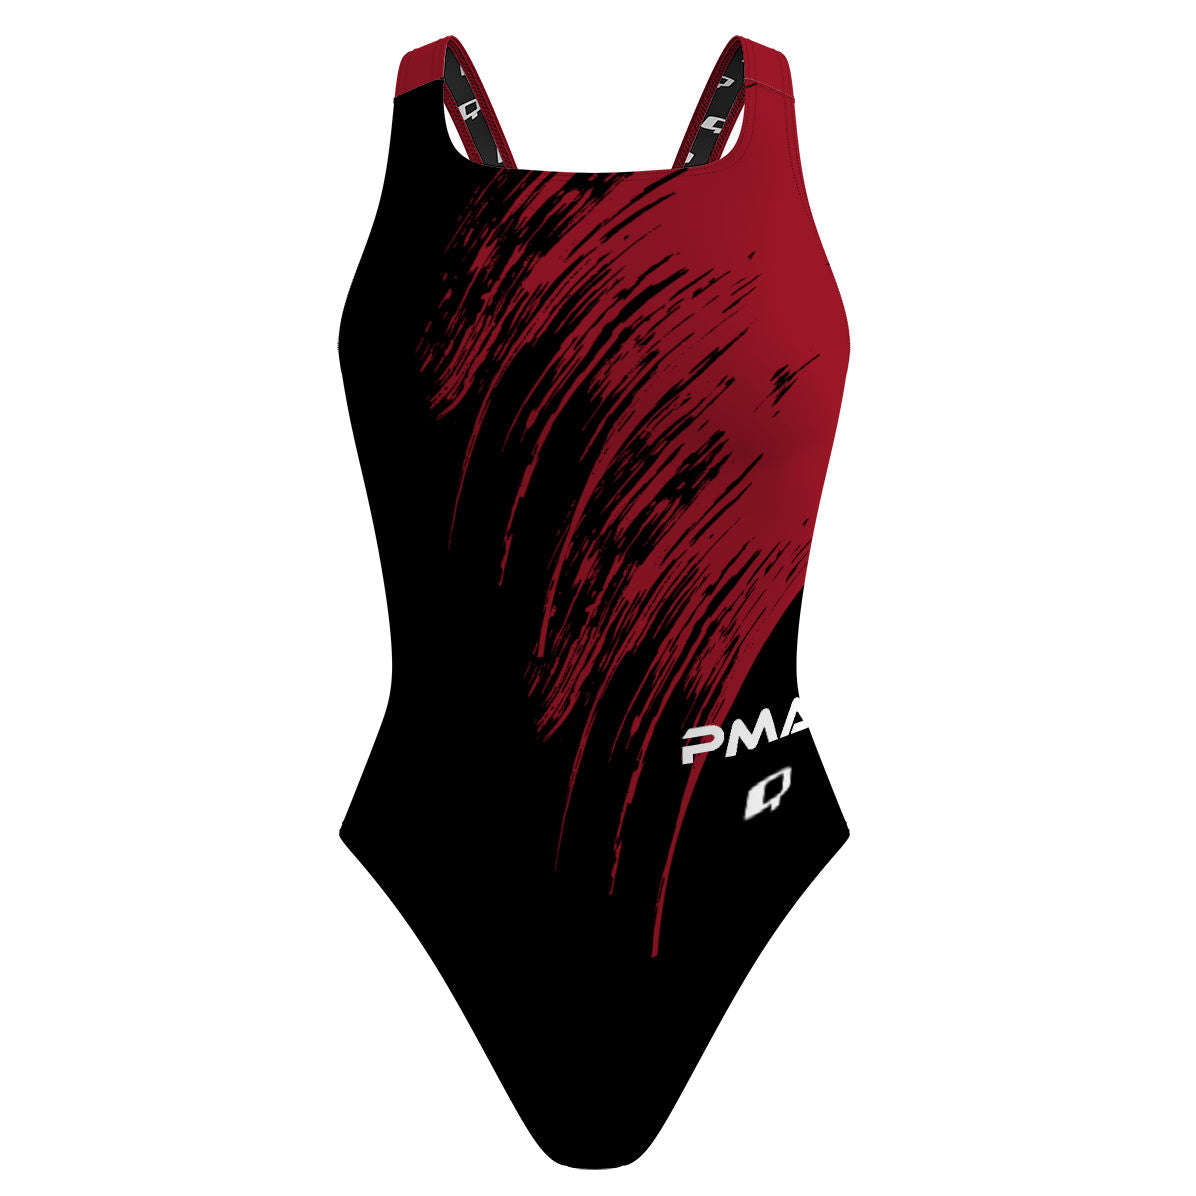 05/03/2022 - Classic Strap Swimsuit